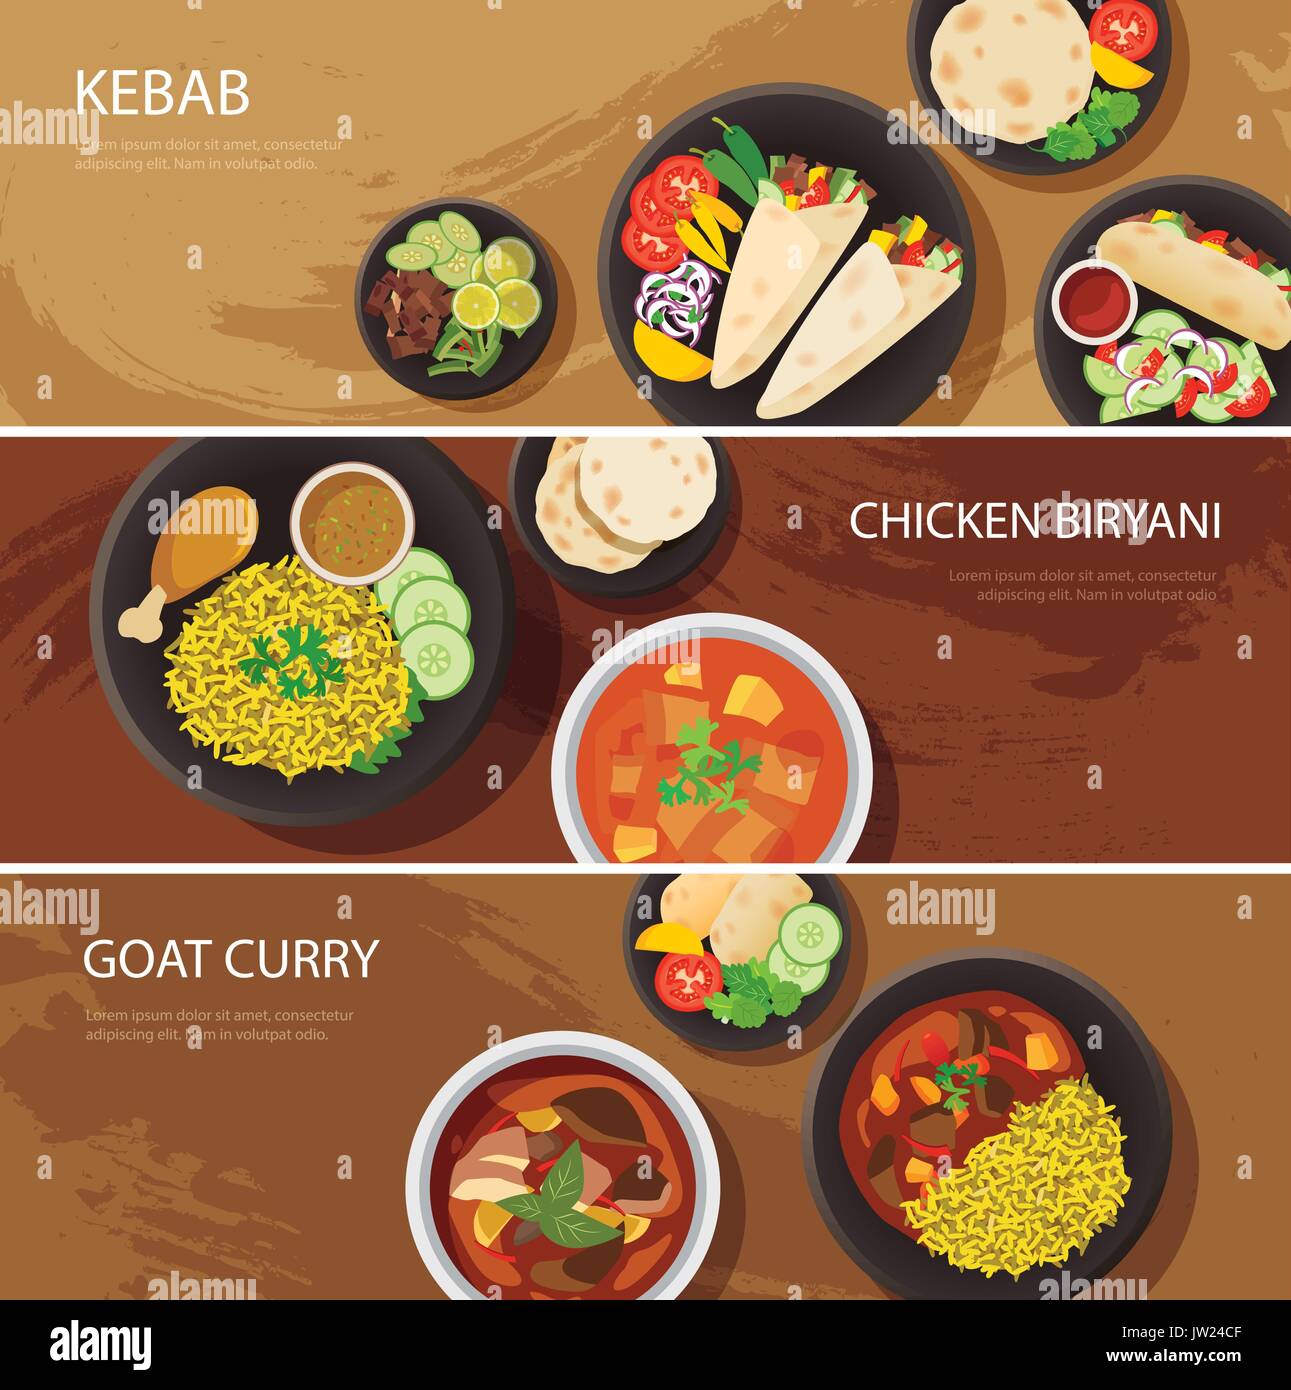 Halal food Web Banner flache Bauform, Kebab, chicken biryani, Ziege curry Stock Vektor